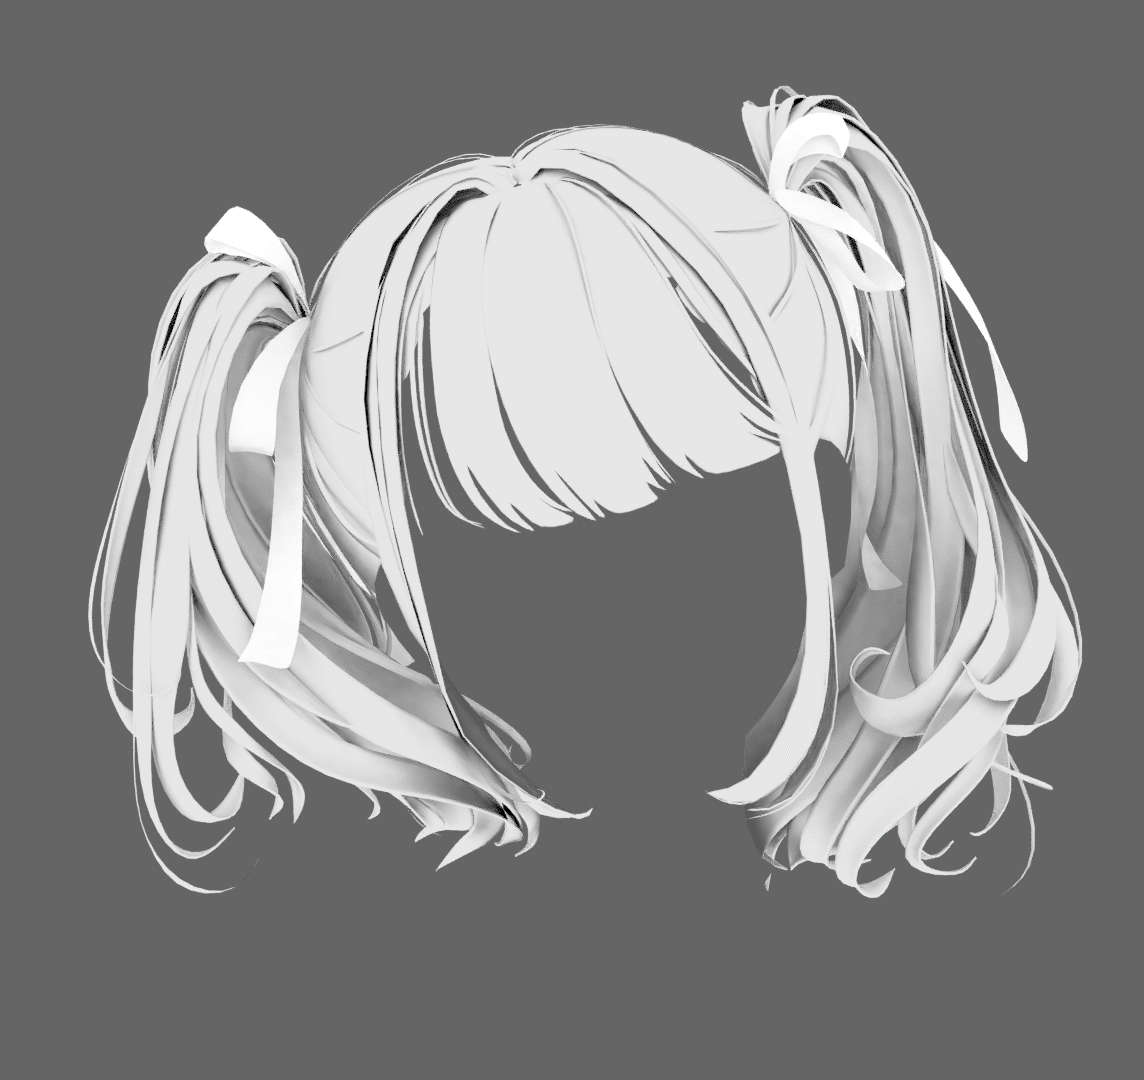 ArtStation - Anime Hair